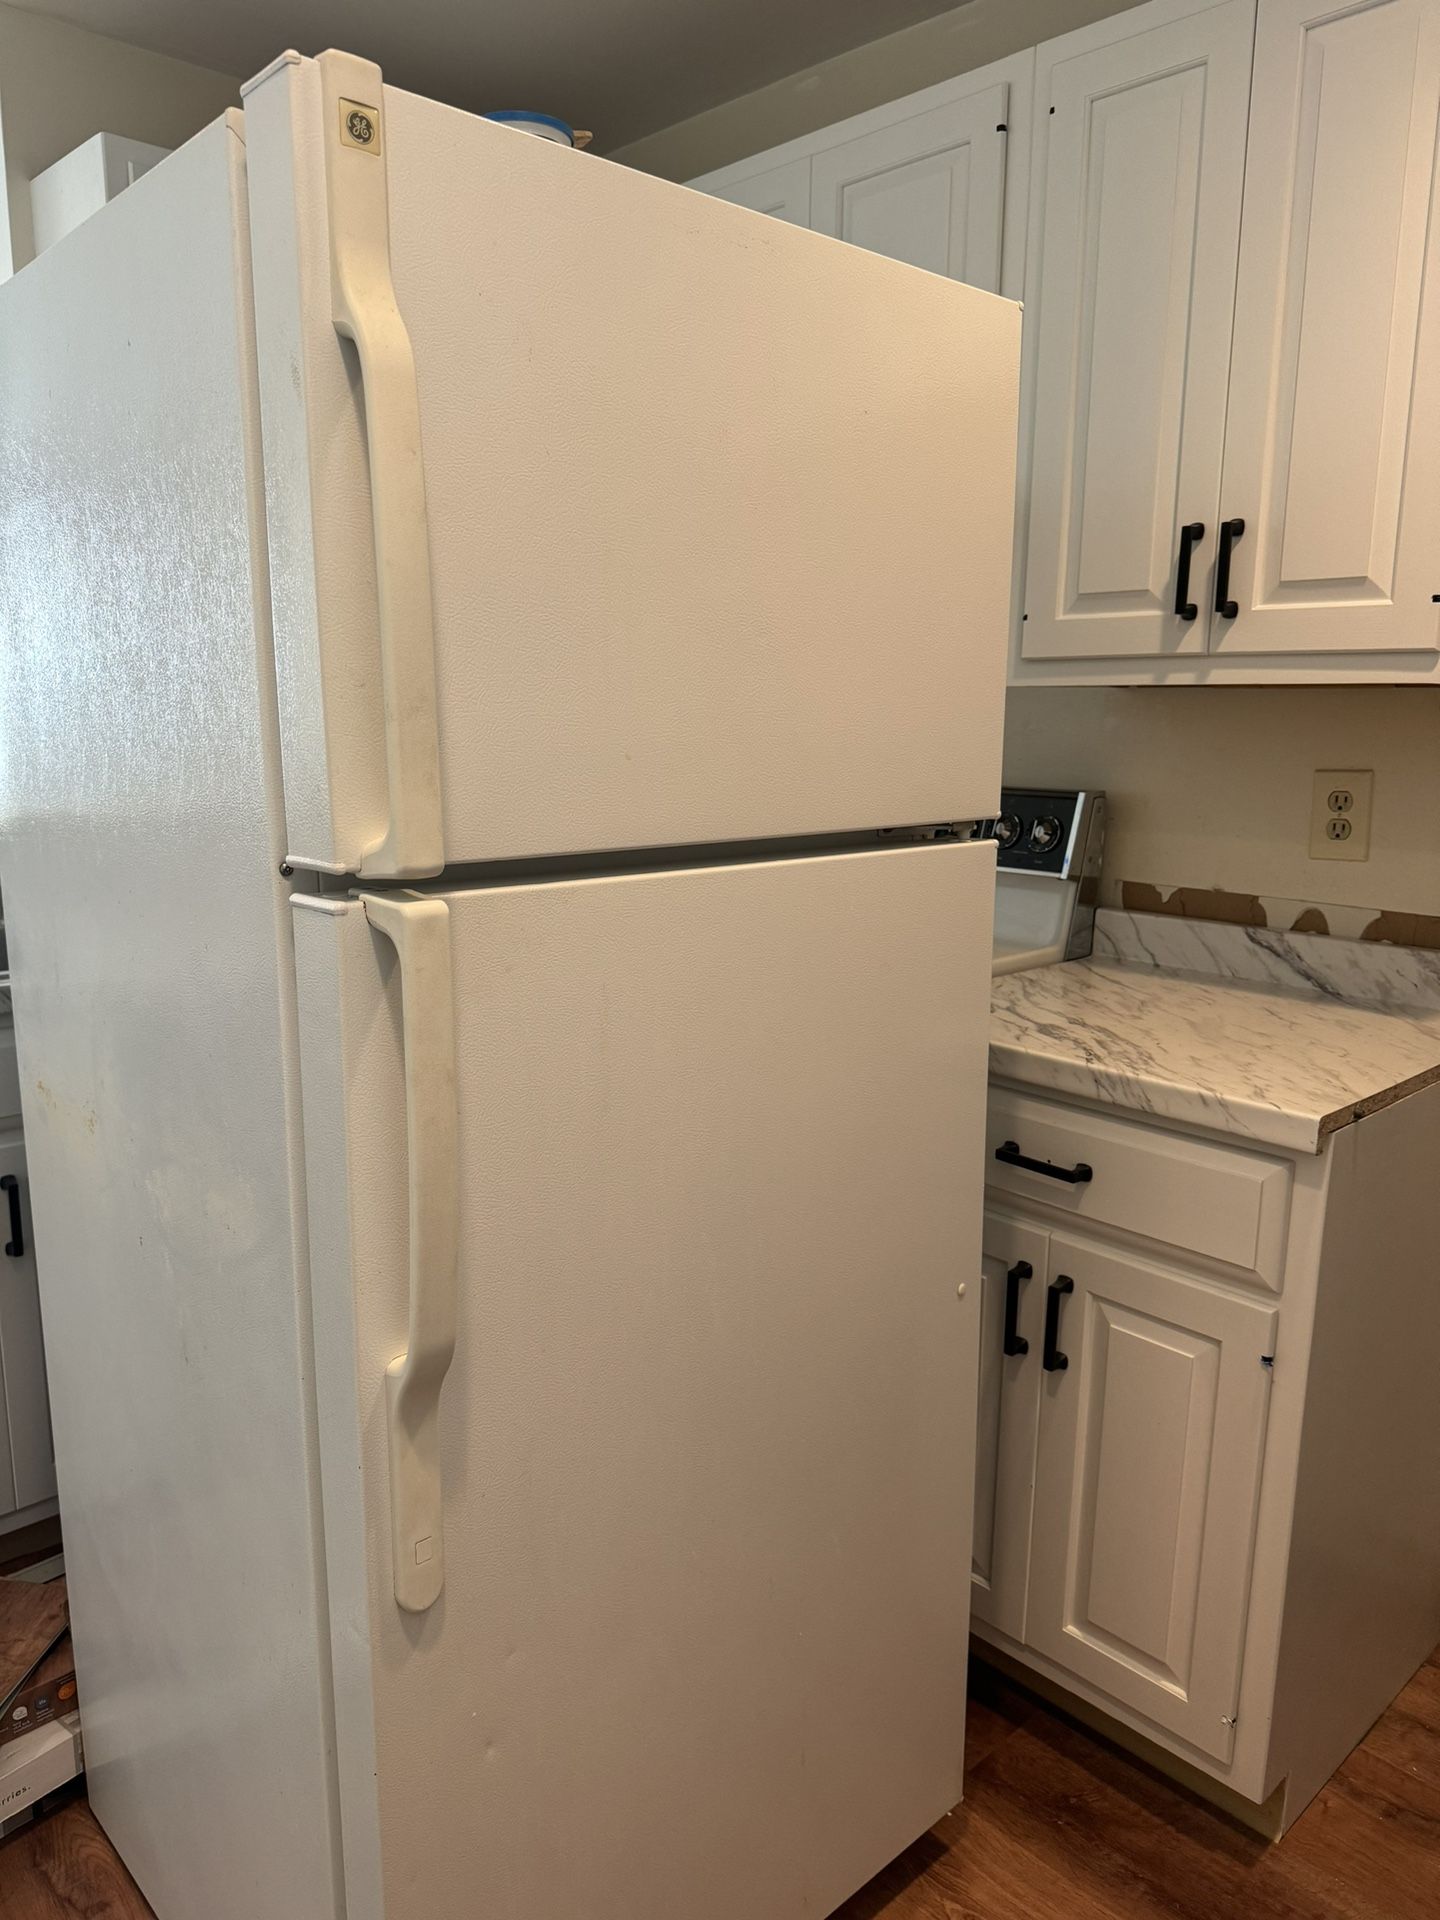 Refrigerator And Range 